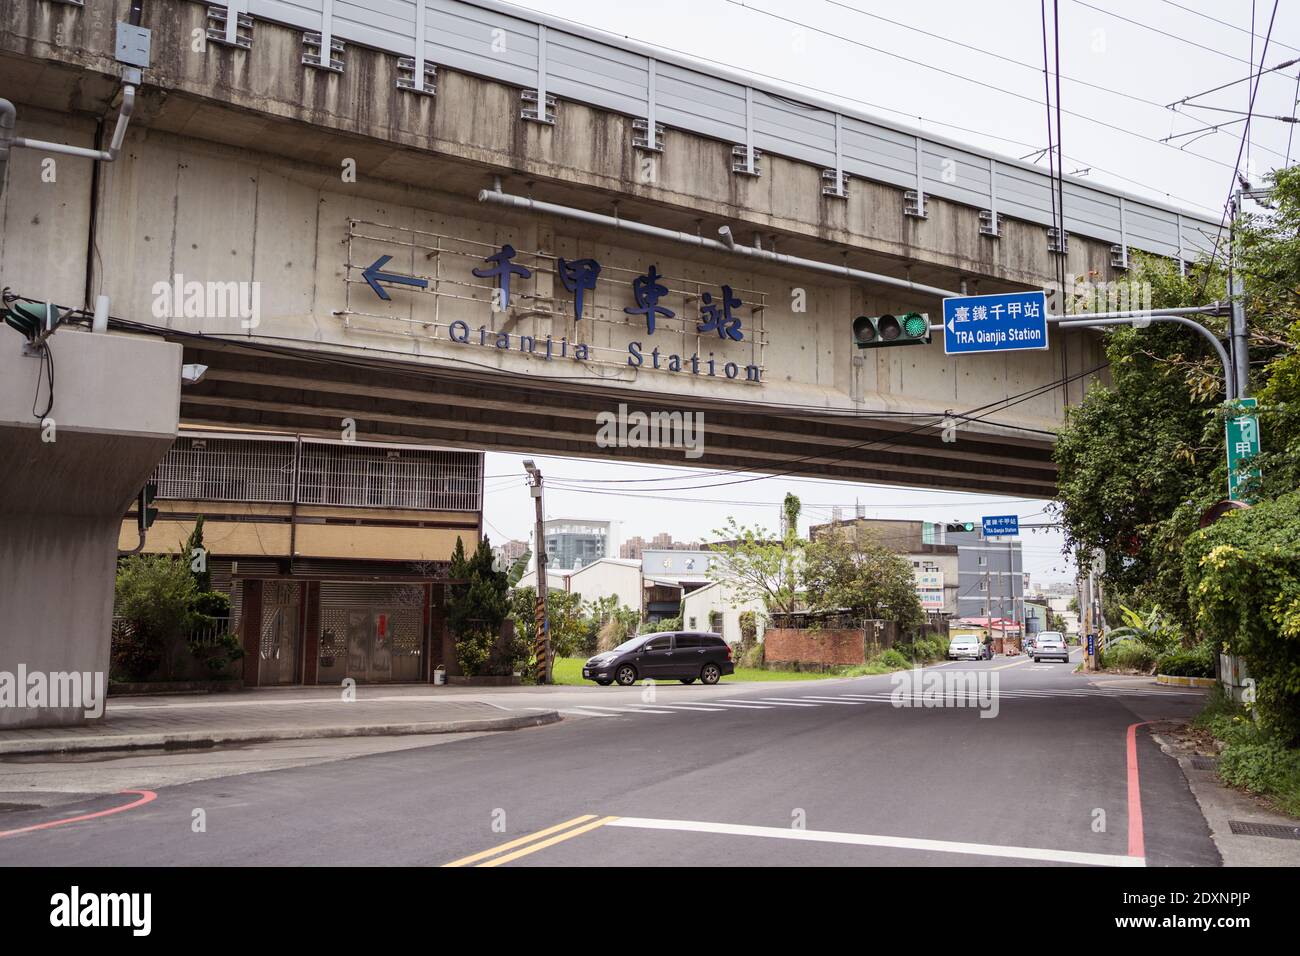 Hsinchu / Taiwan - March 20, 2020: Train bridge with sign of Qianjia train station Stock Photo